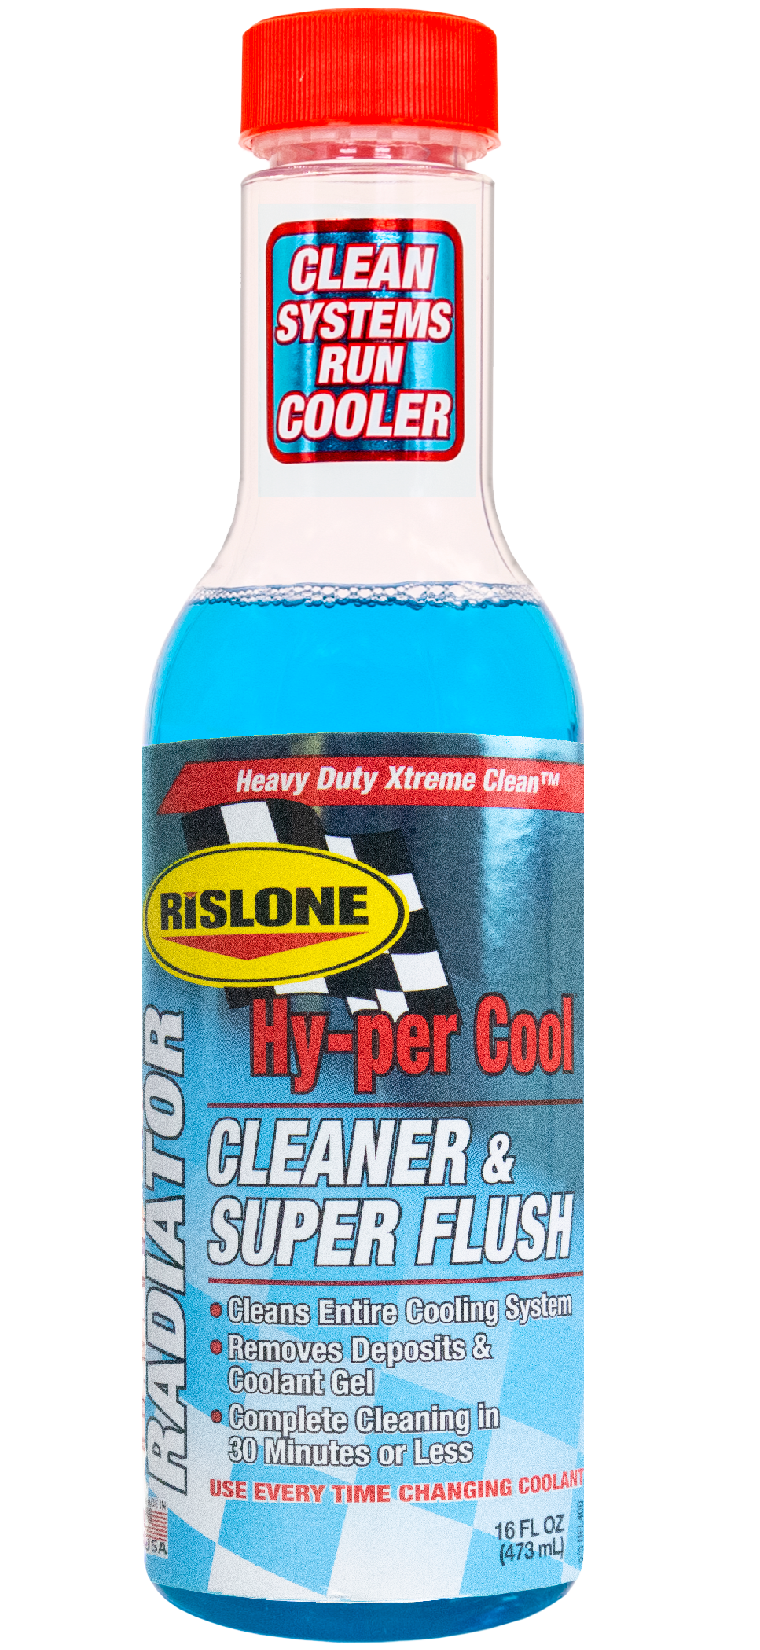 Hy-per Cool Radiator Cleaner & Super Flush